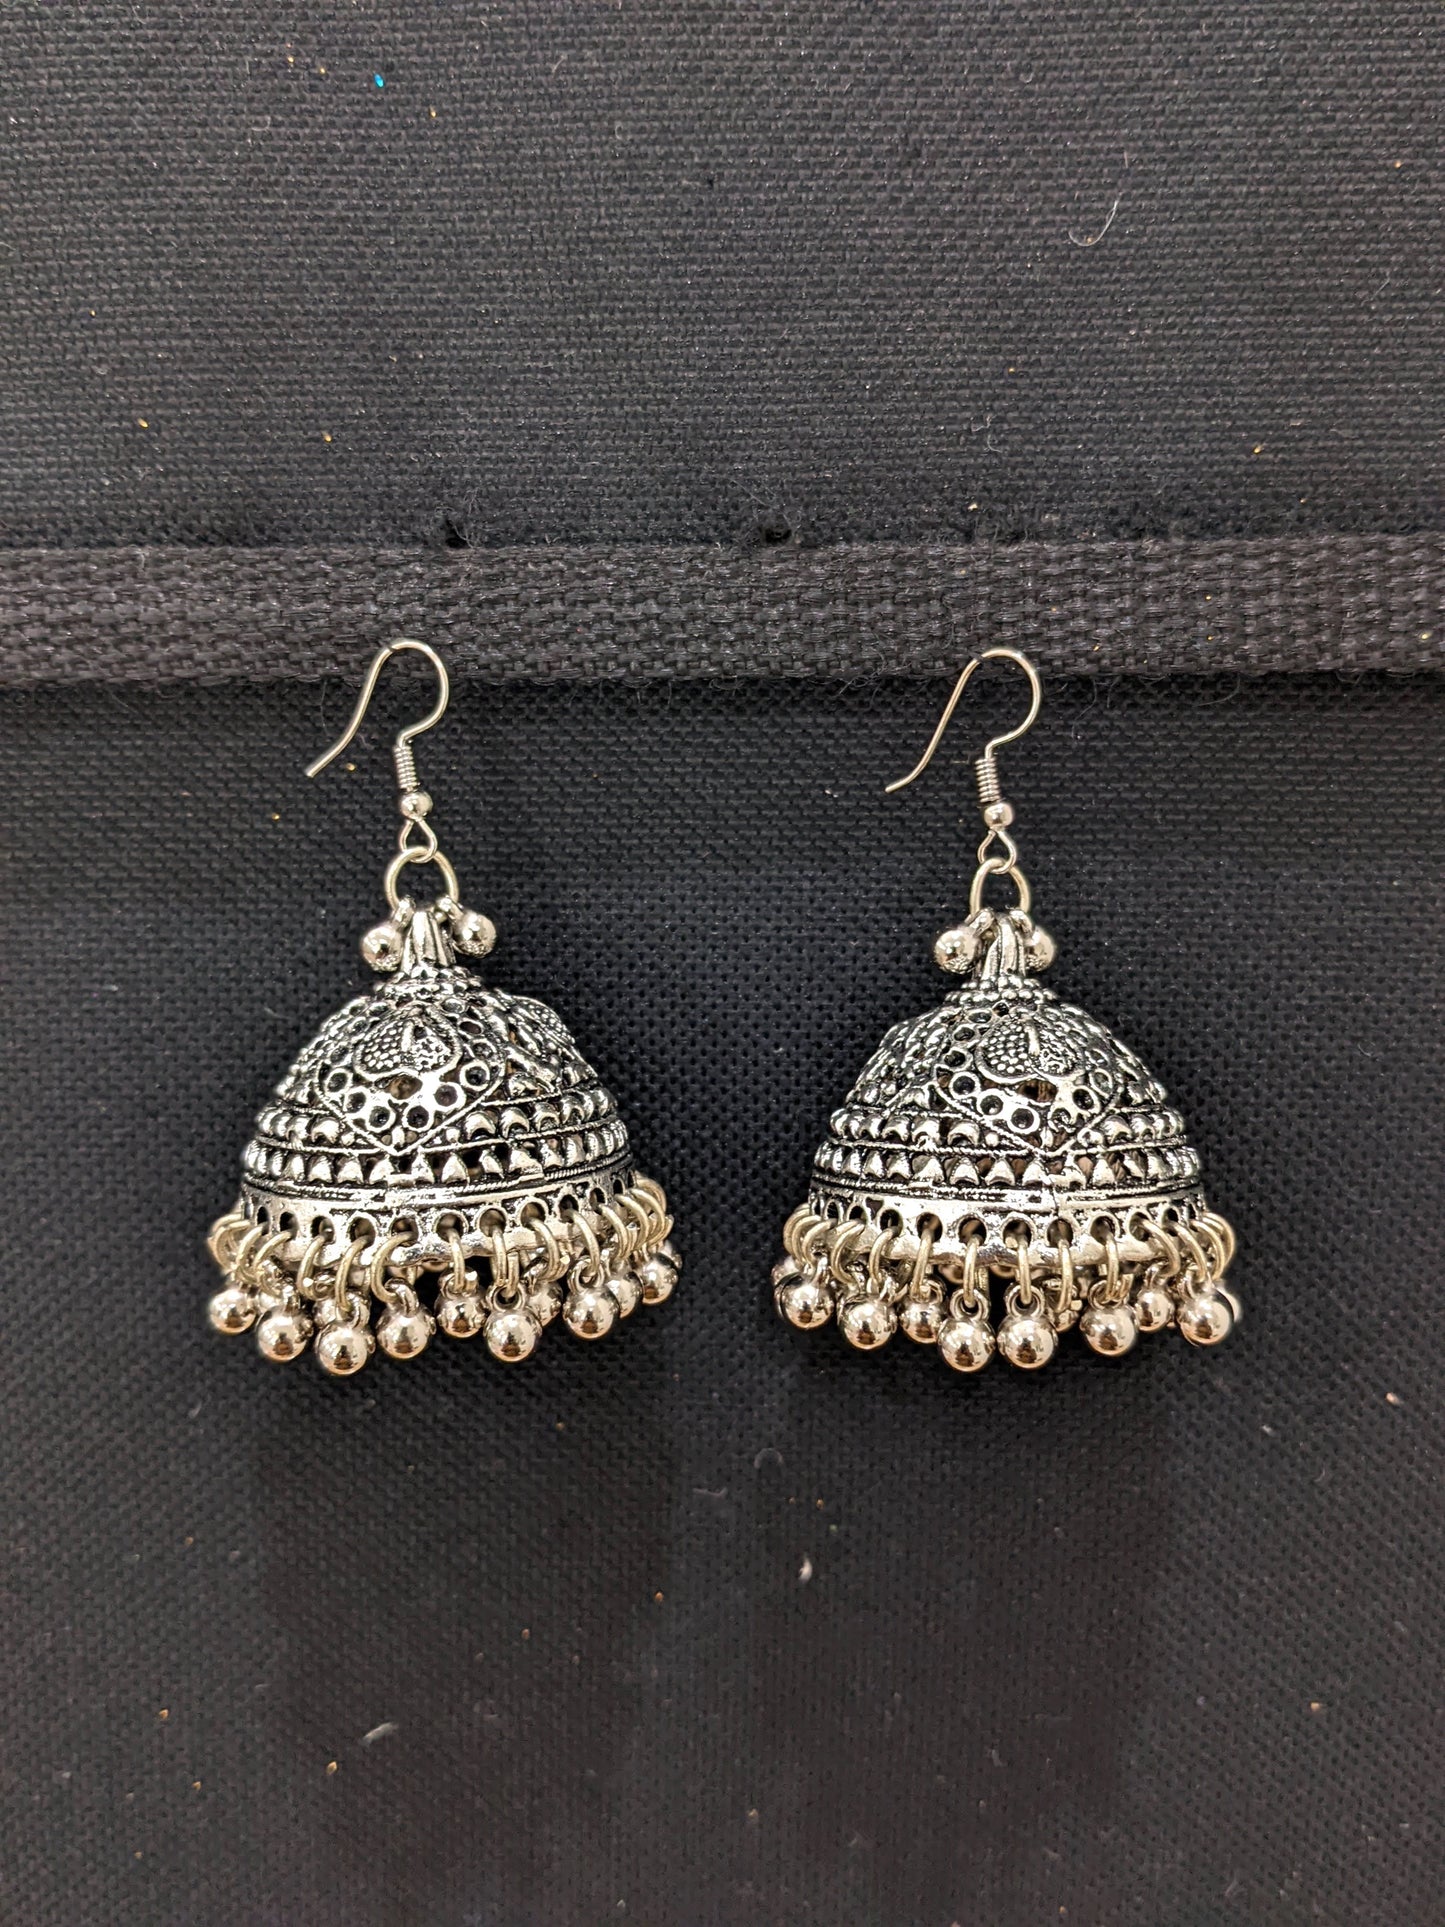 Oxidized Silver Large Jhumka Hook Earrings - 2 designs